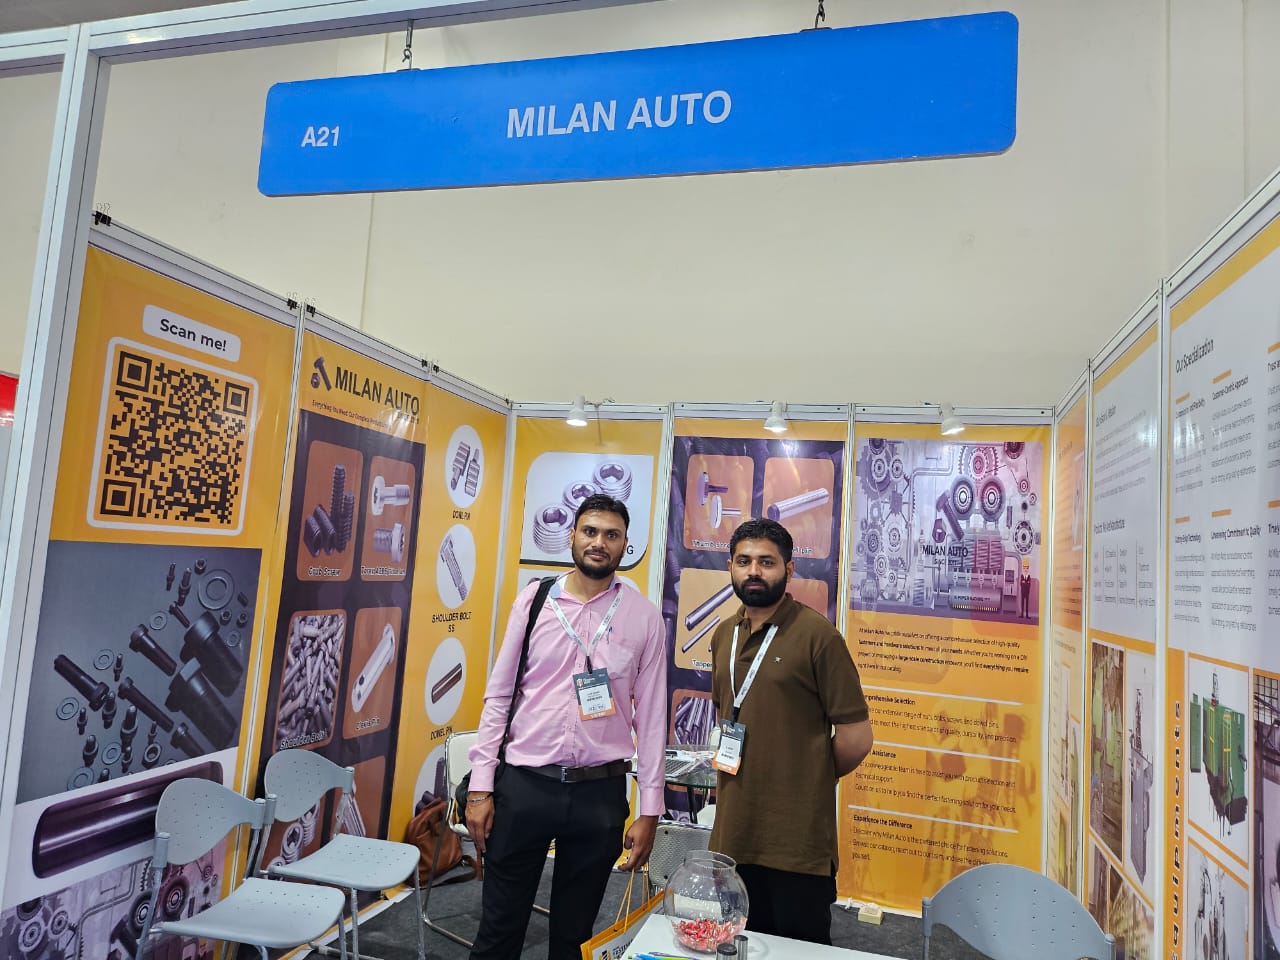 milan auto exhibition (5)